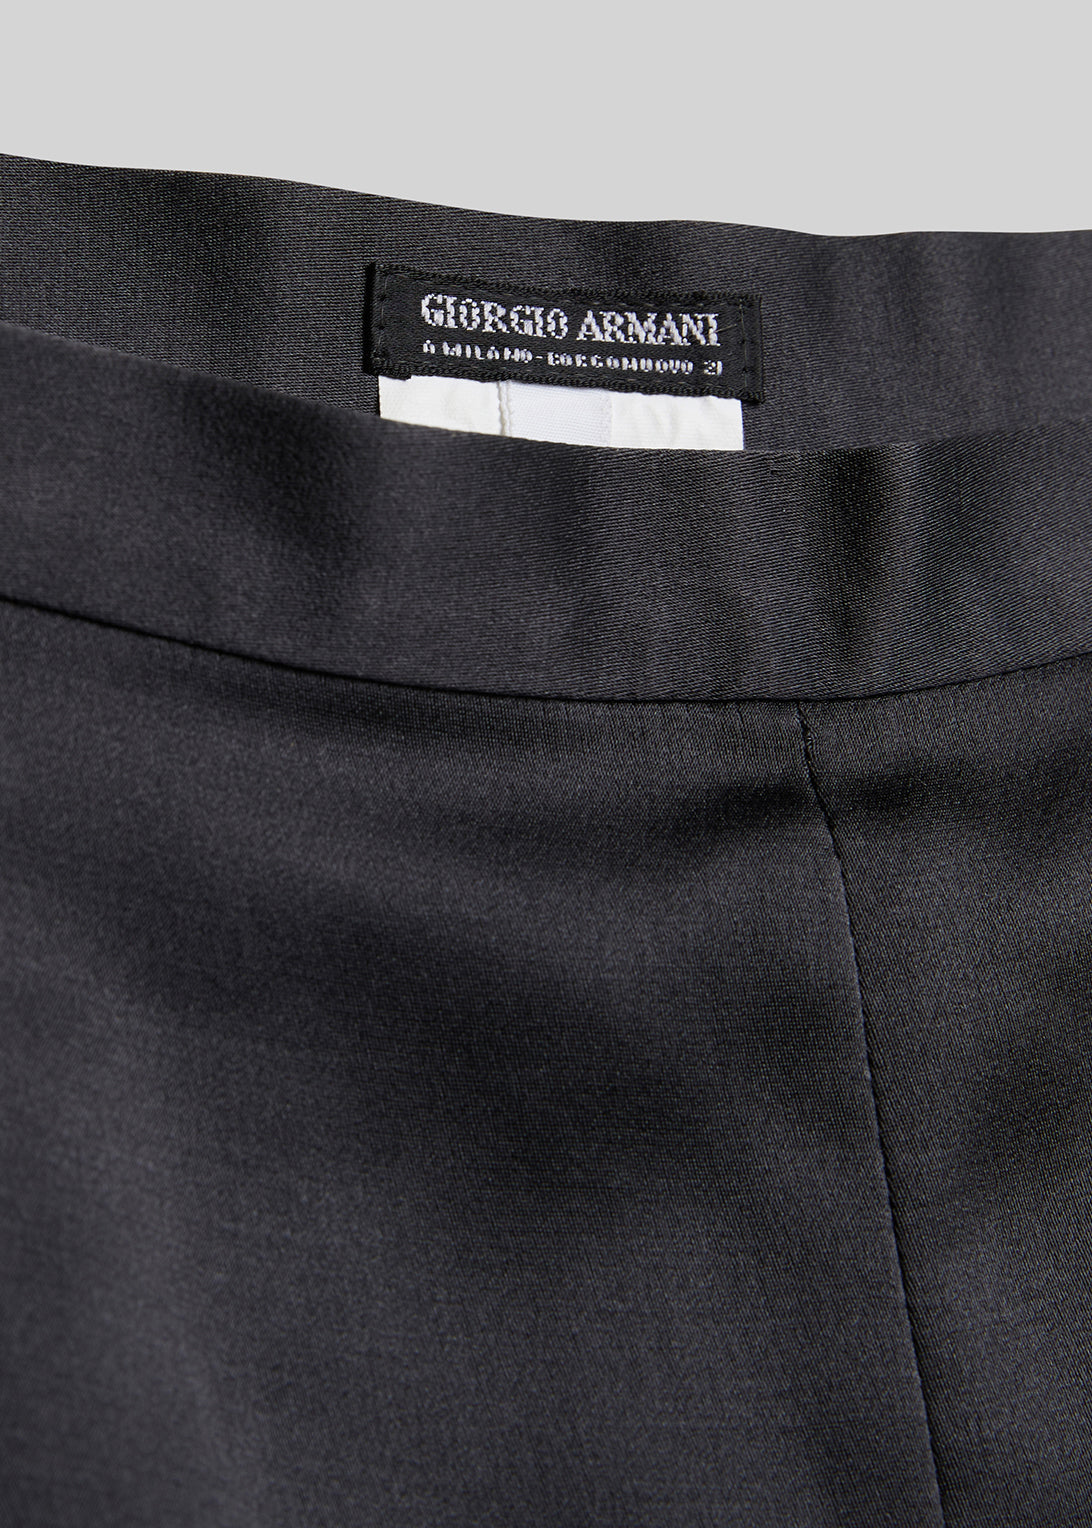 Giorgio Armani trousers - IT46